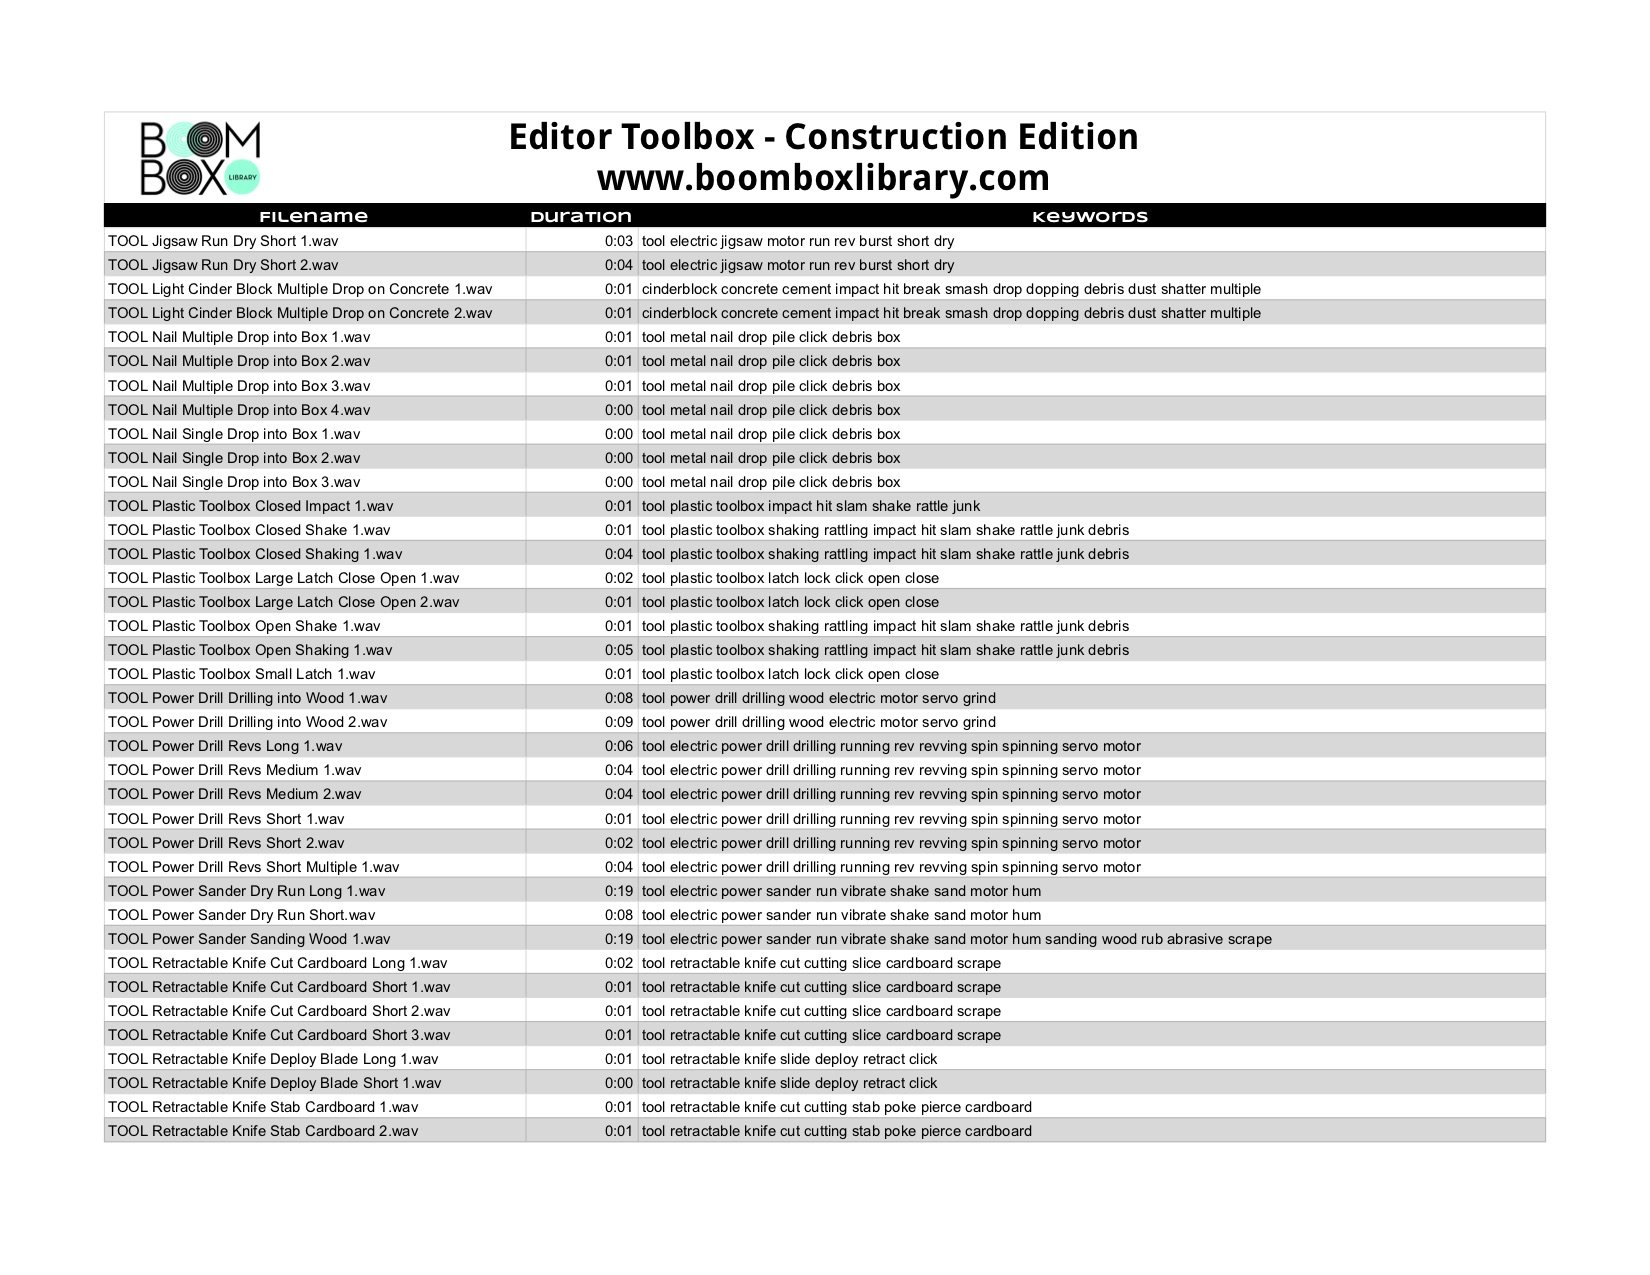 Boom Box Library - Editor Toolbox - Construction Edition - Metadata - JPG PG 3.jpg